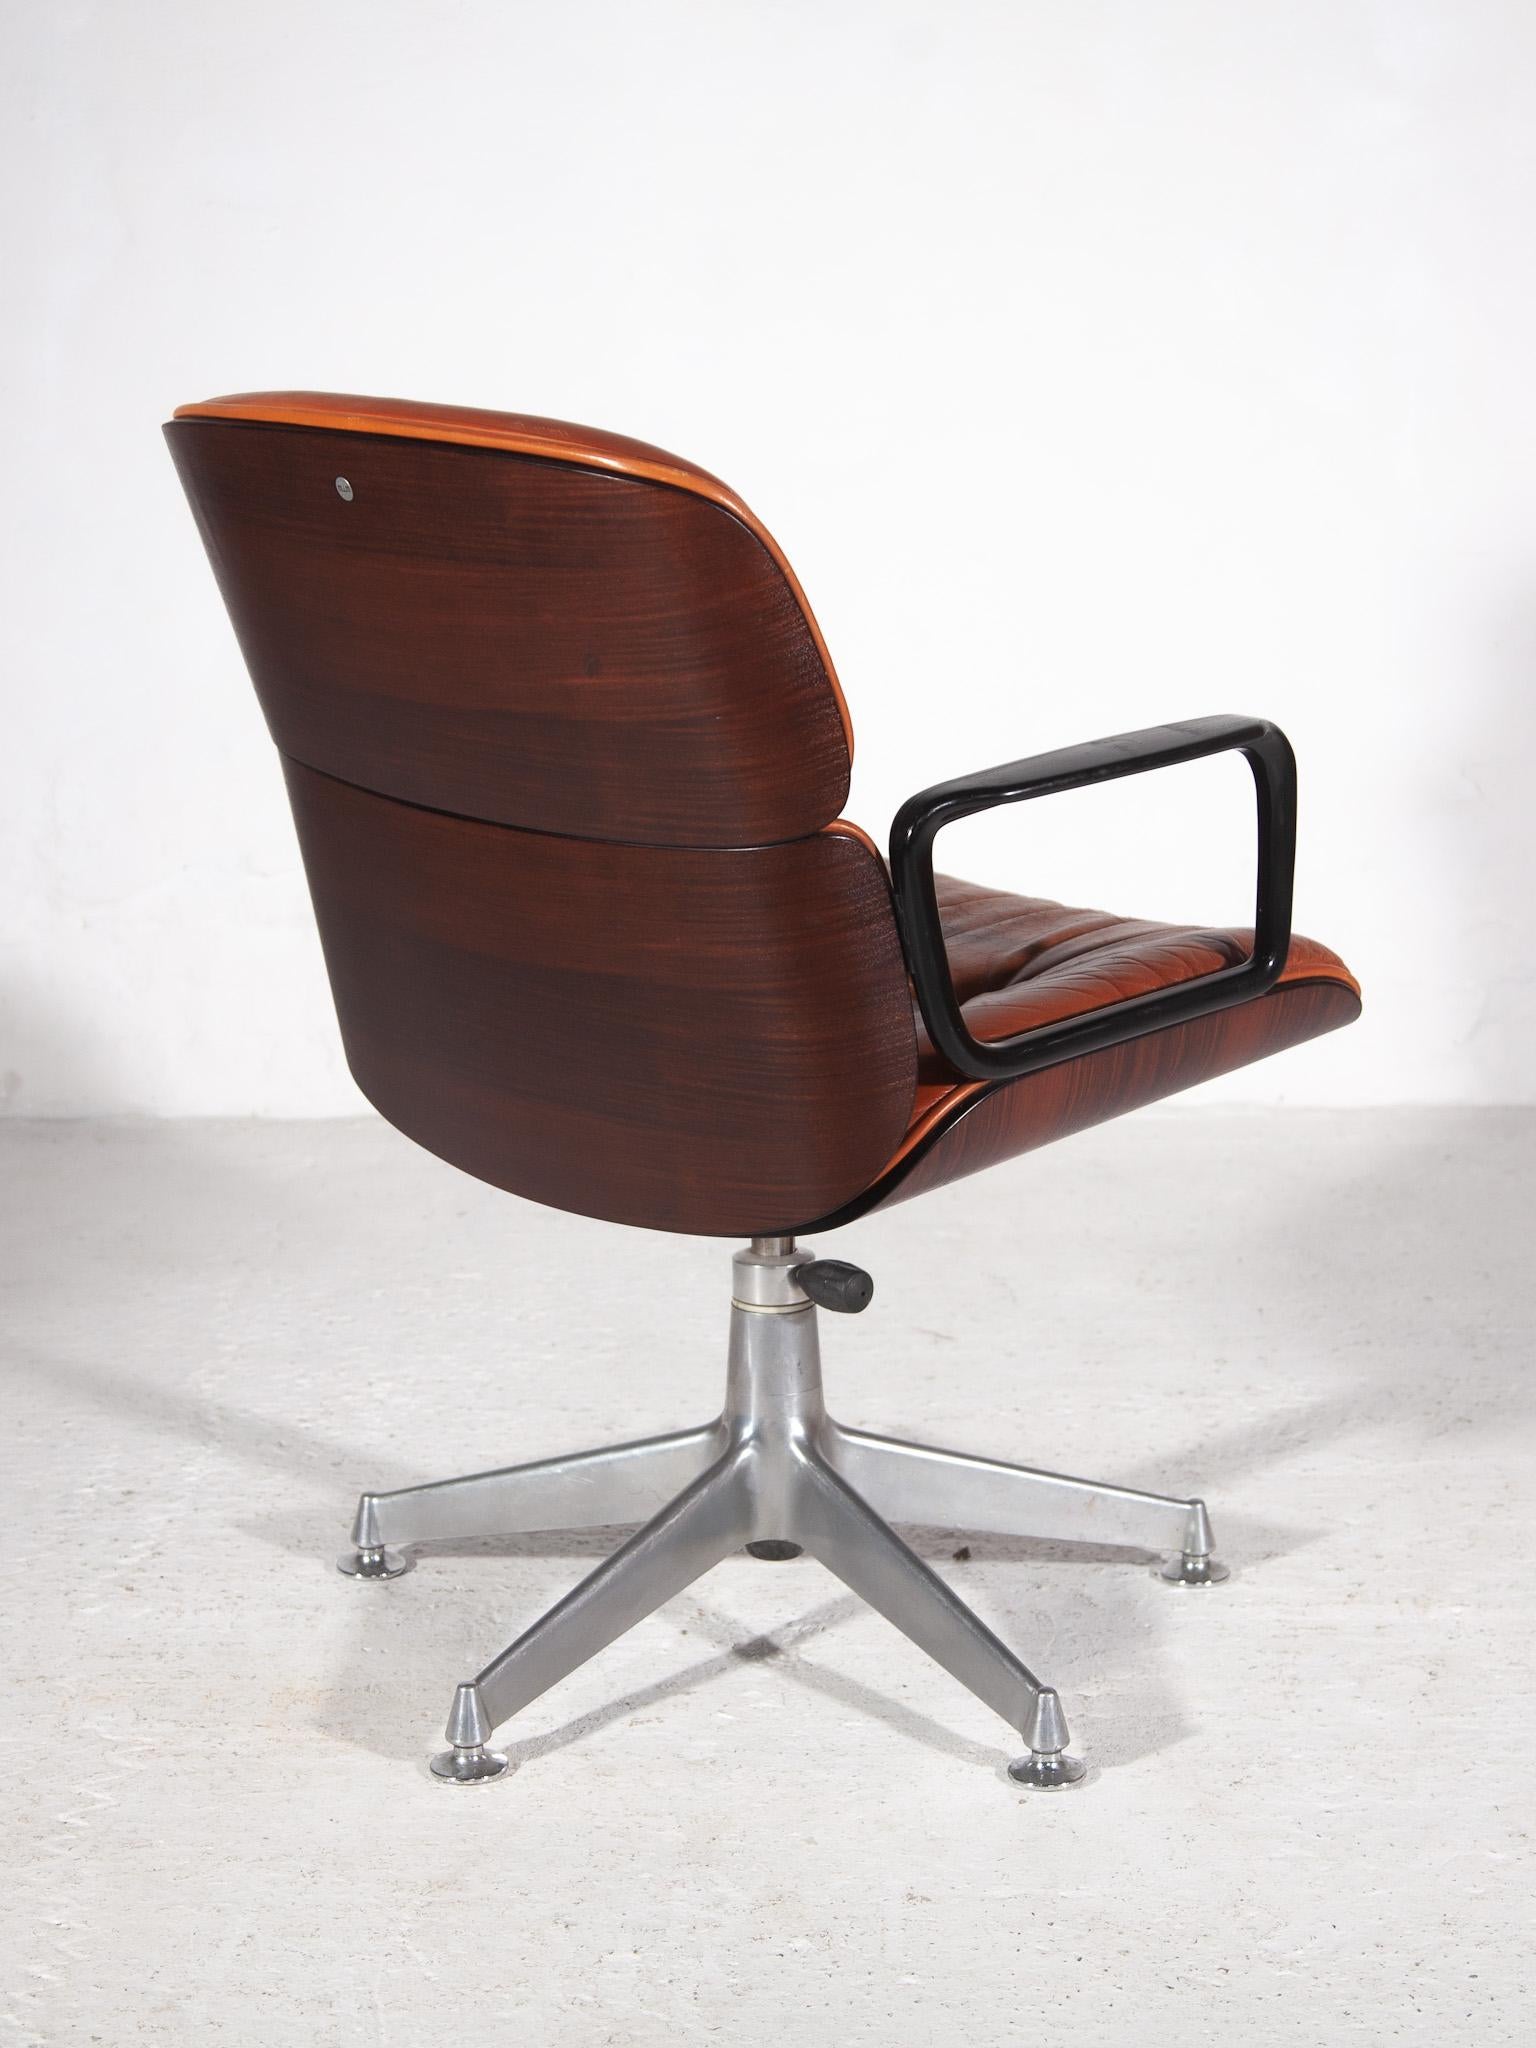 Rare Executive Arm Desk Chair for Mobli Italiani Moderni, Rome 1